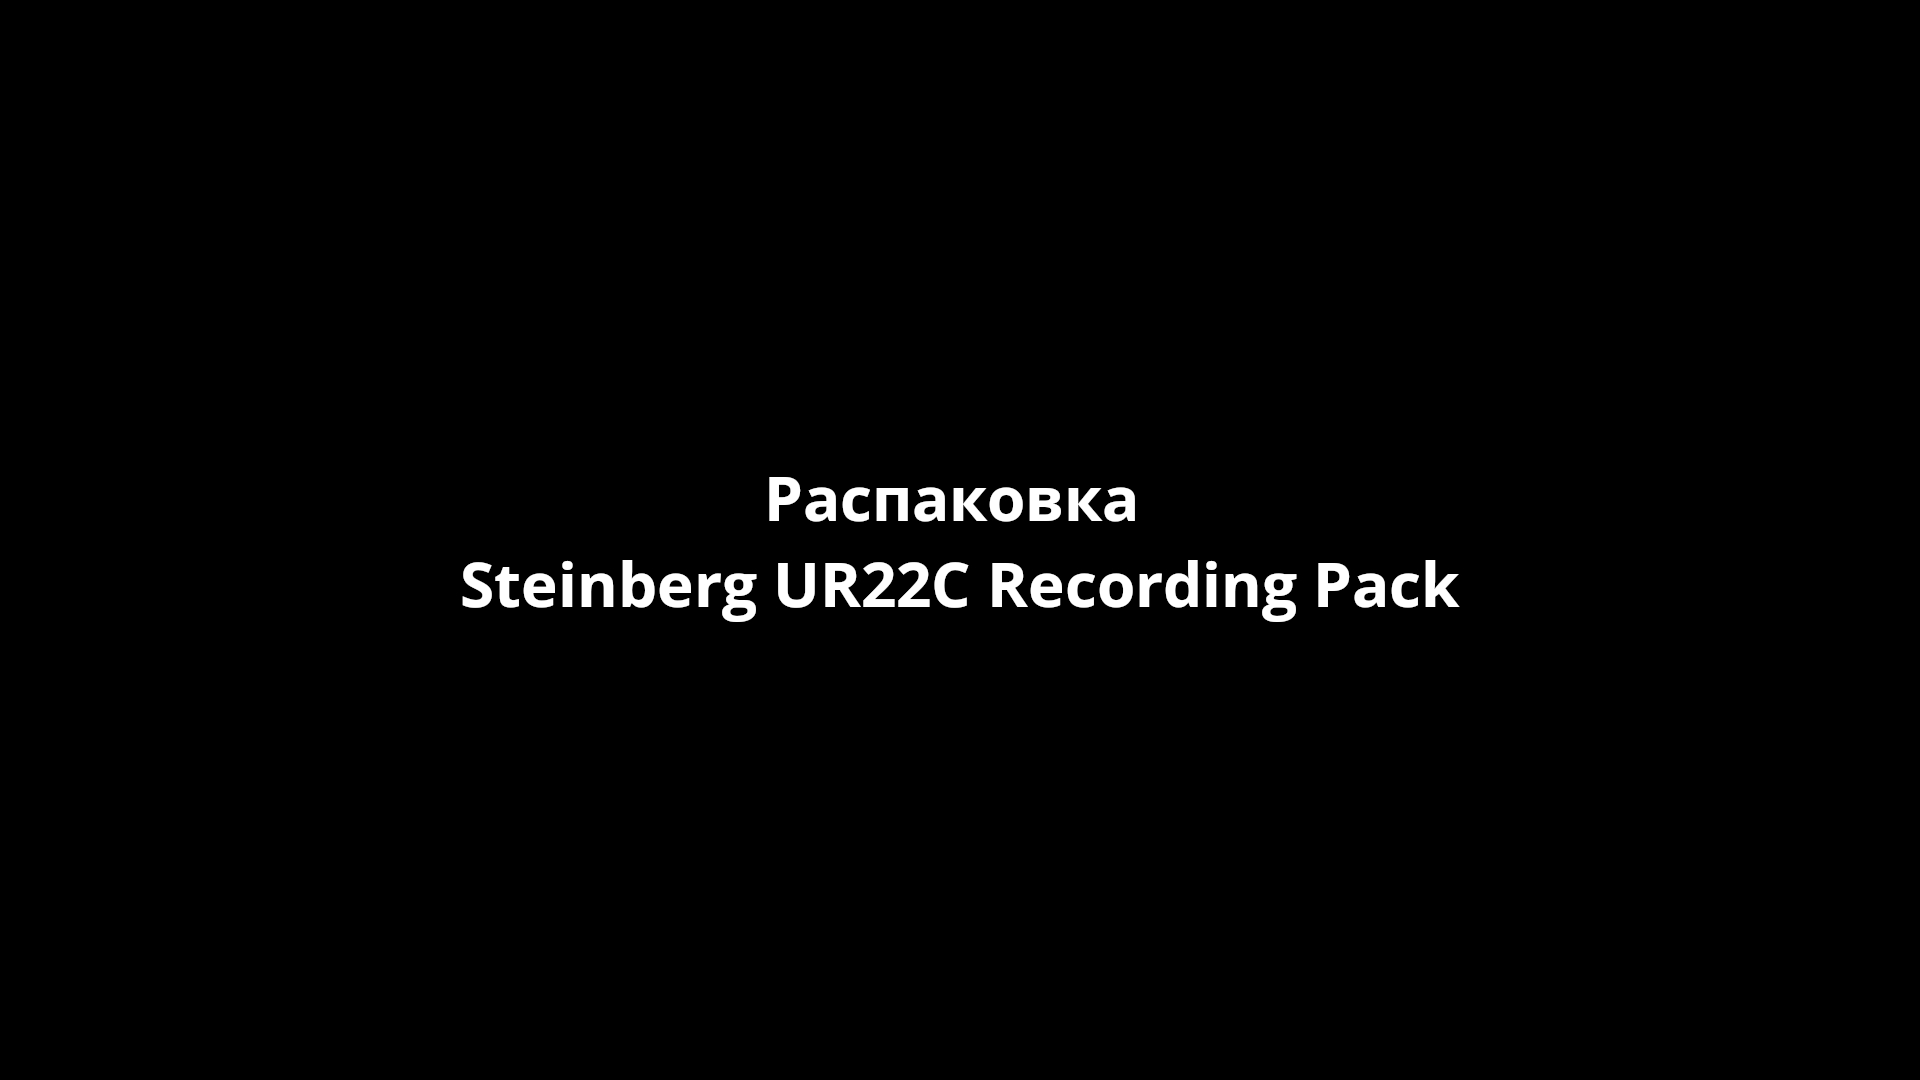 Распаковка Steinberg UR22C Recording Pack [FunnyHowTo]